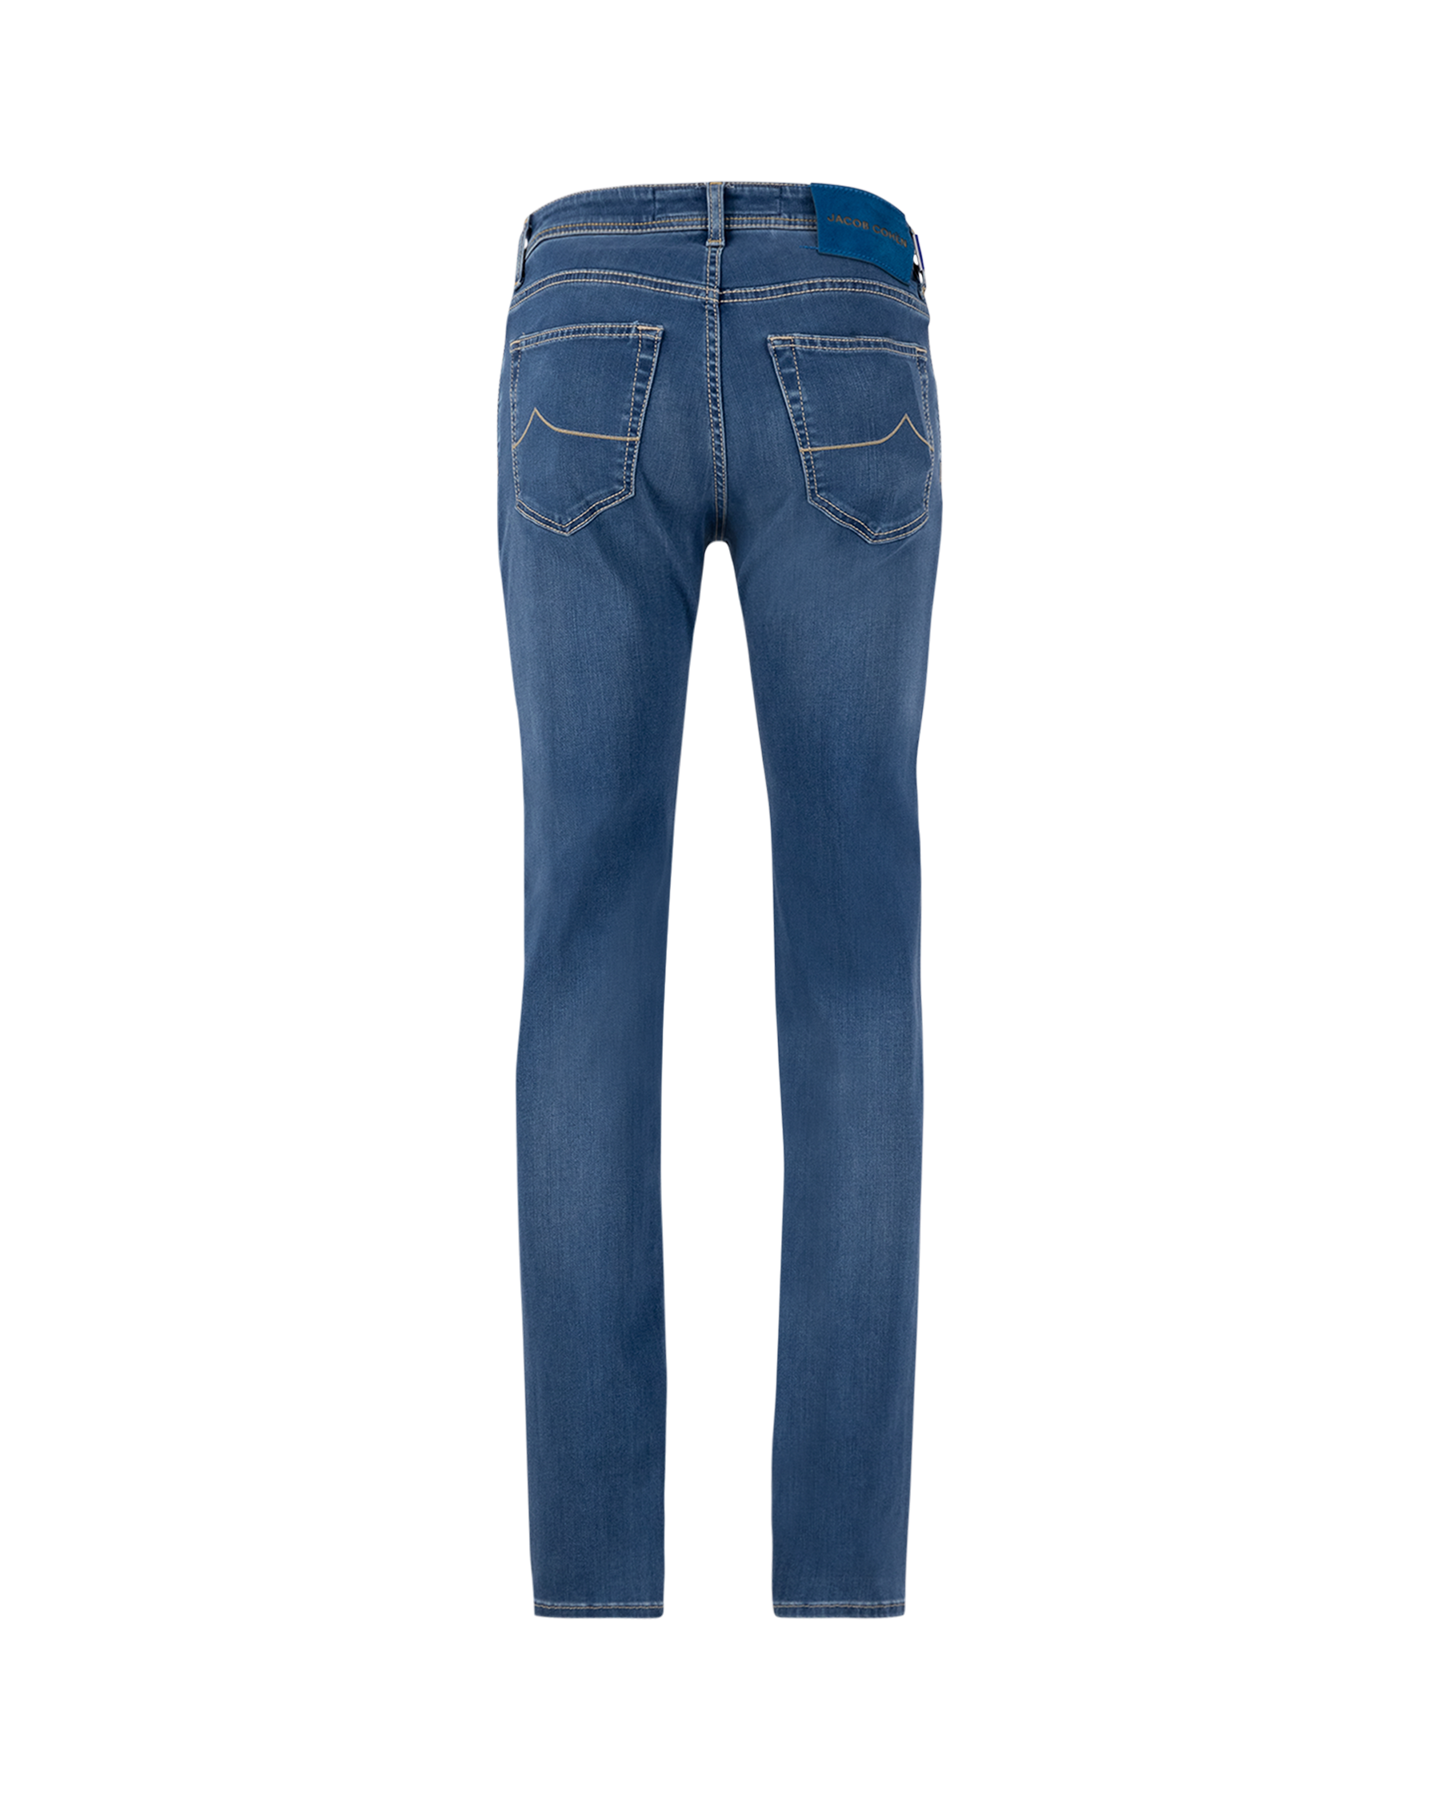 Jacob Cohen Nick Slim Light-Blue Stone Wash Jeans 753D DENIM 2